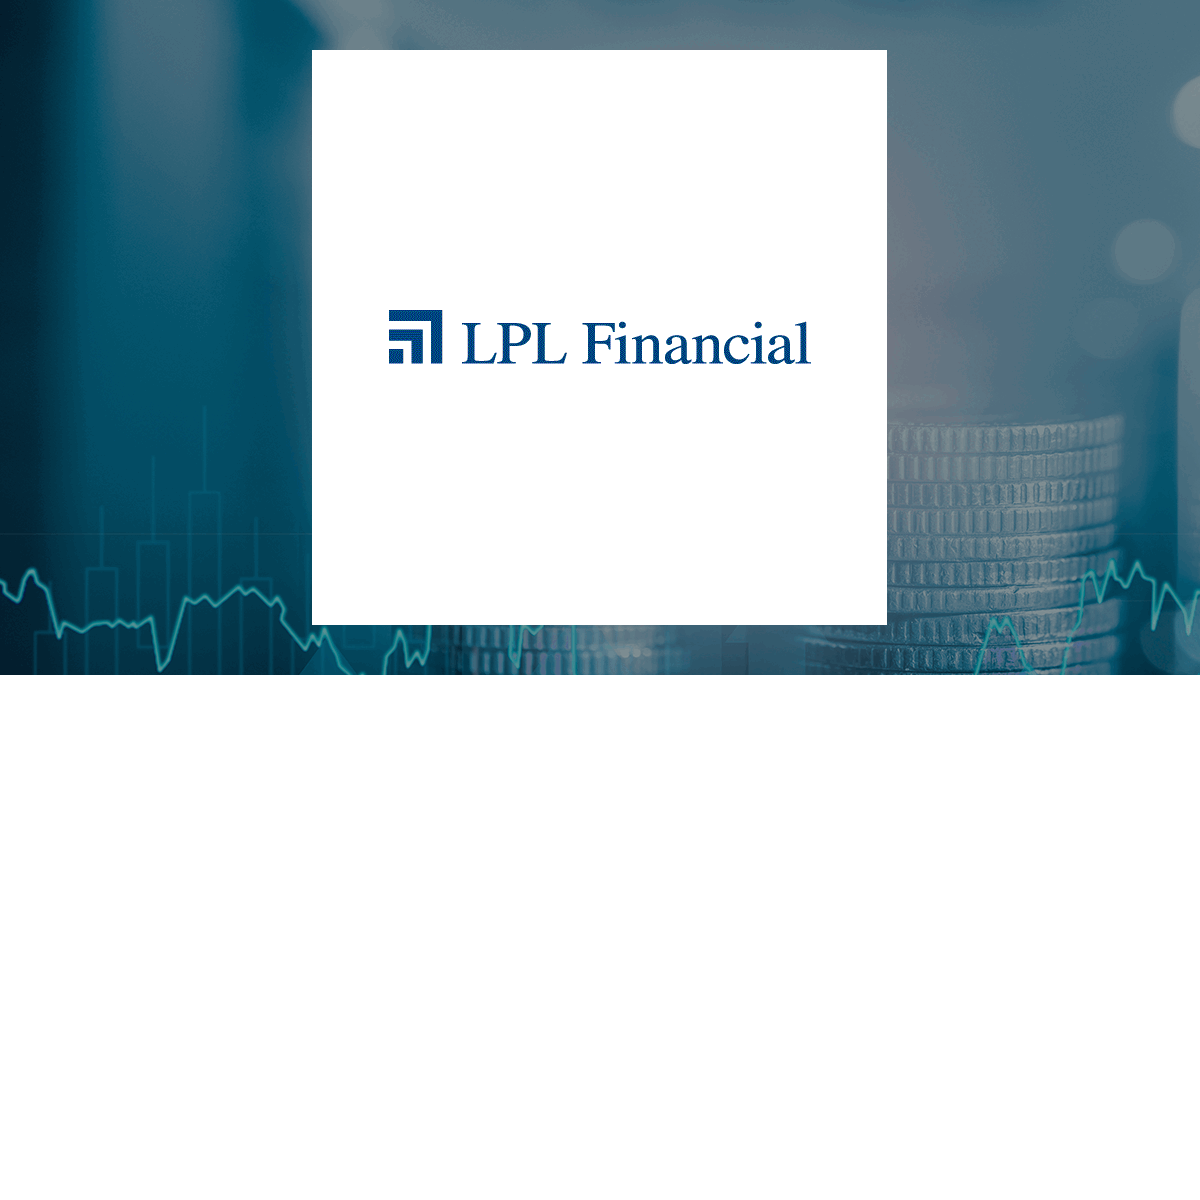 LPL Financial logo with Finance background